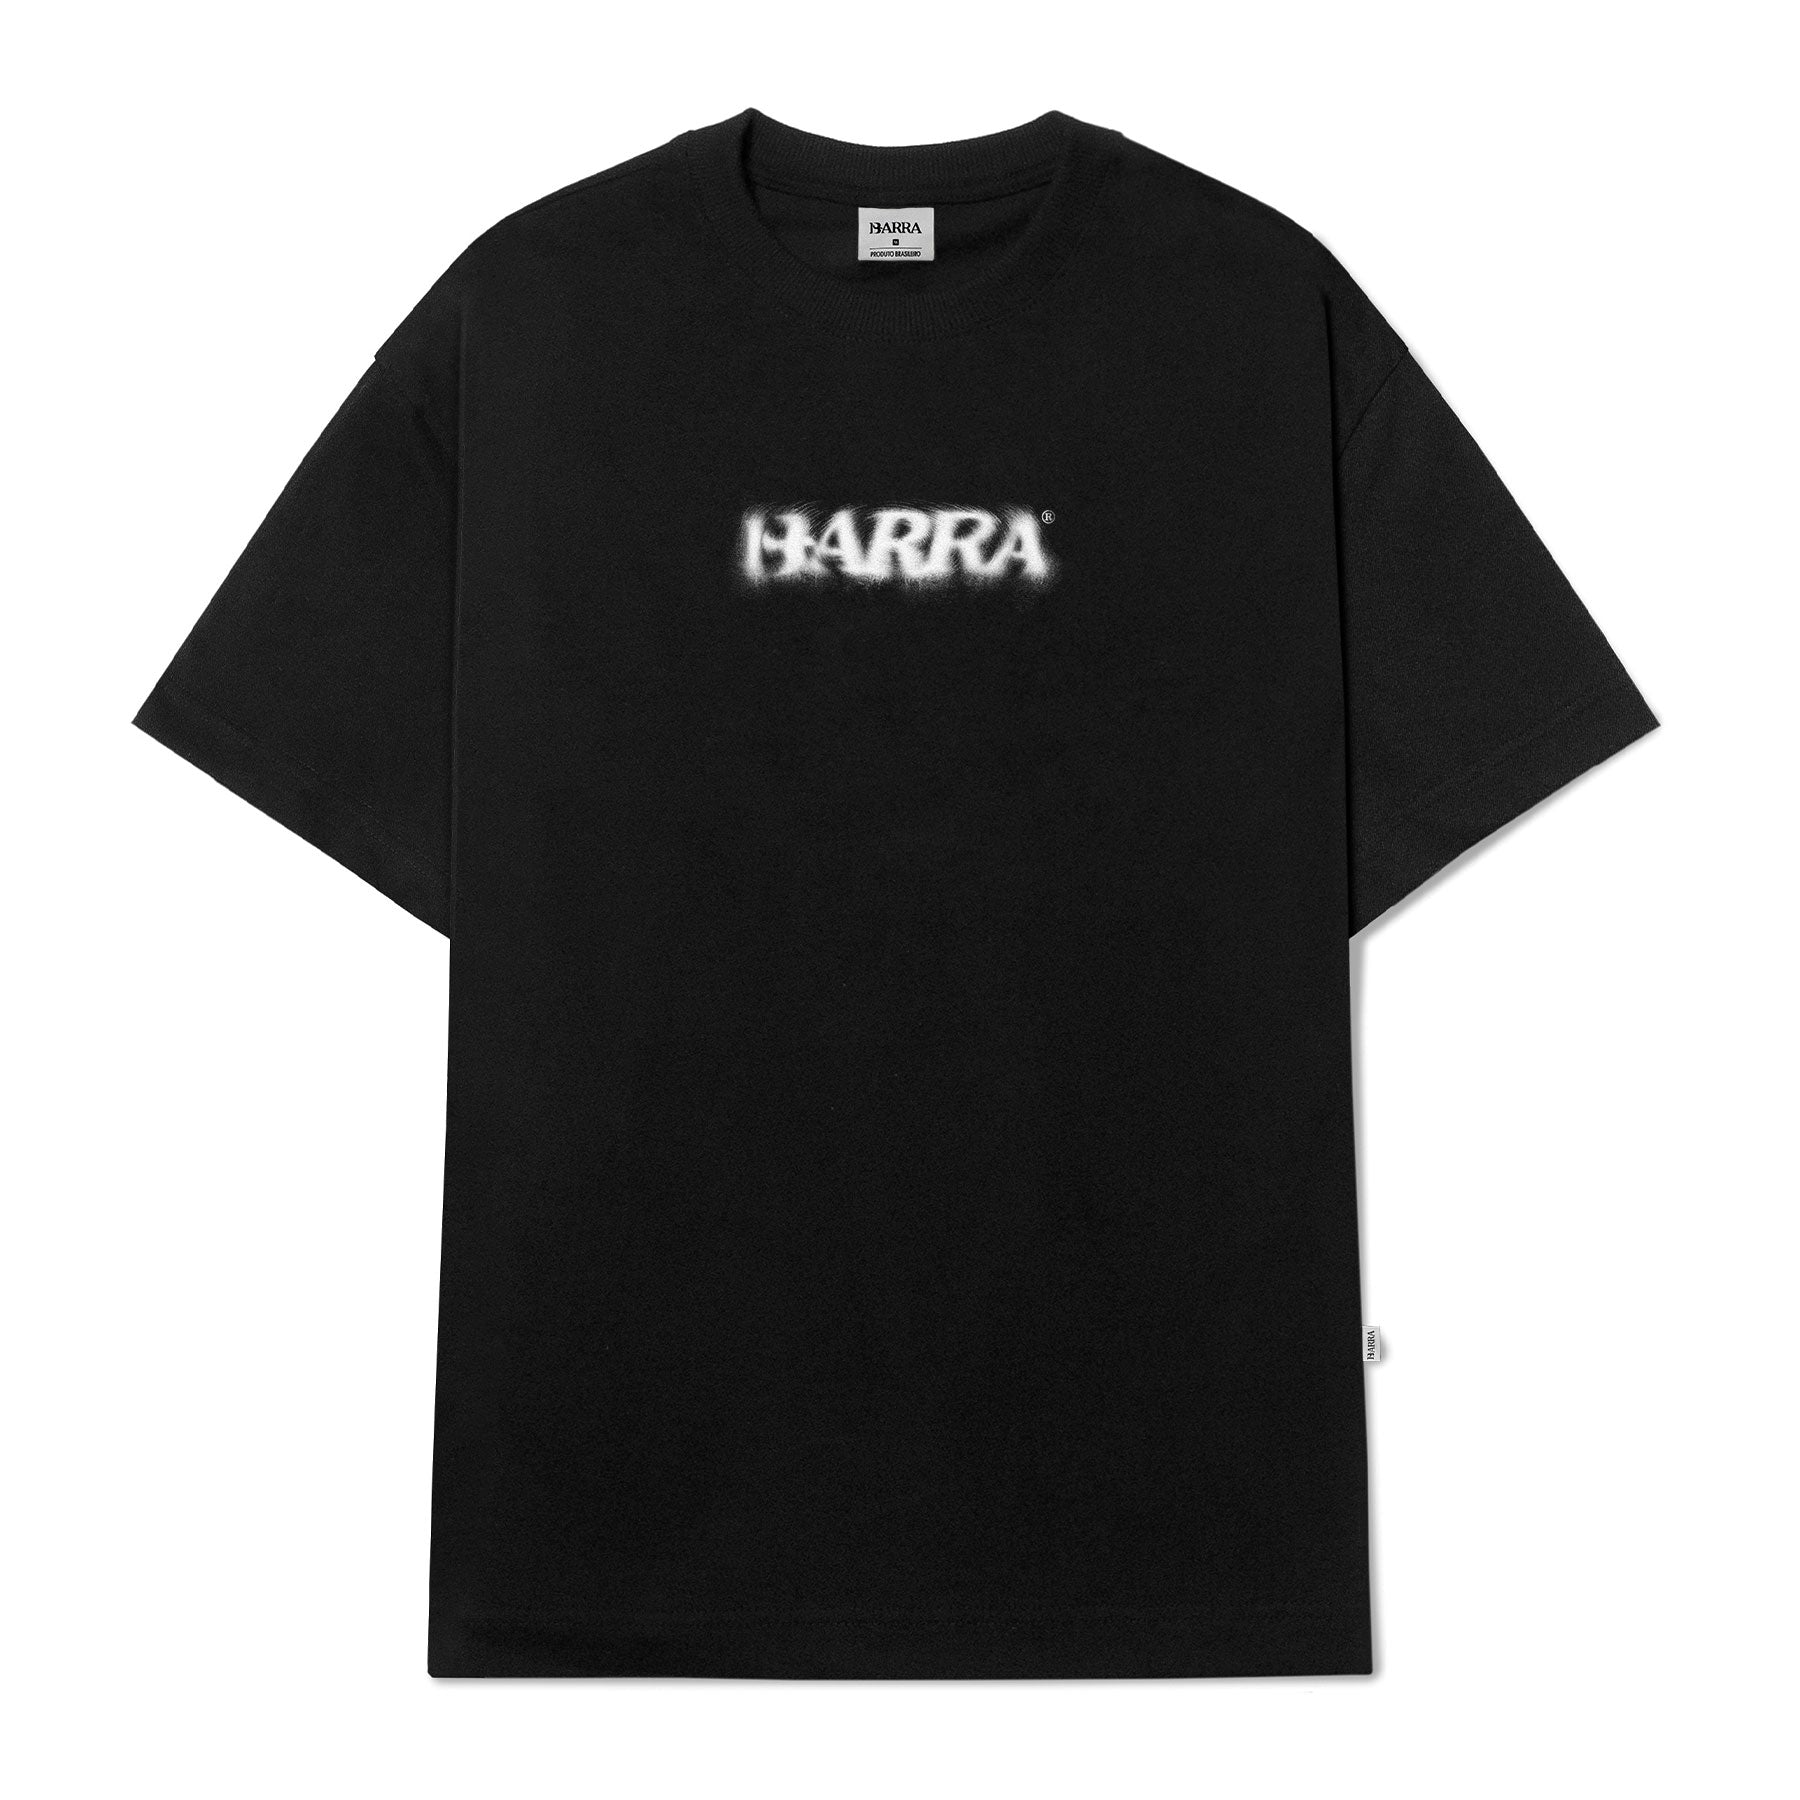 Barra Crew - Camiseta Remix Preta